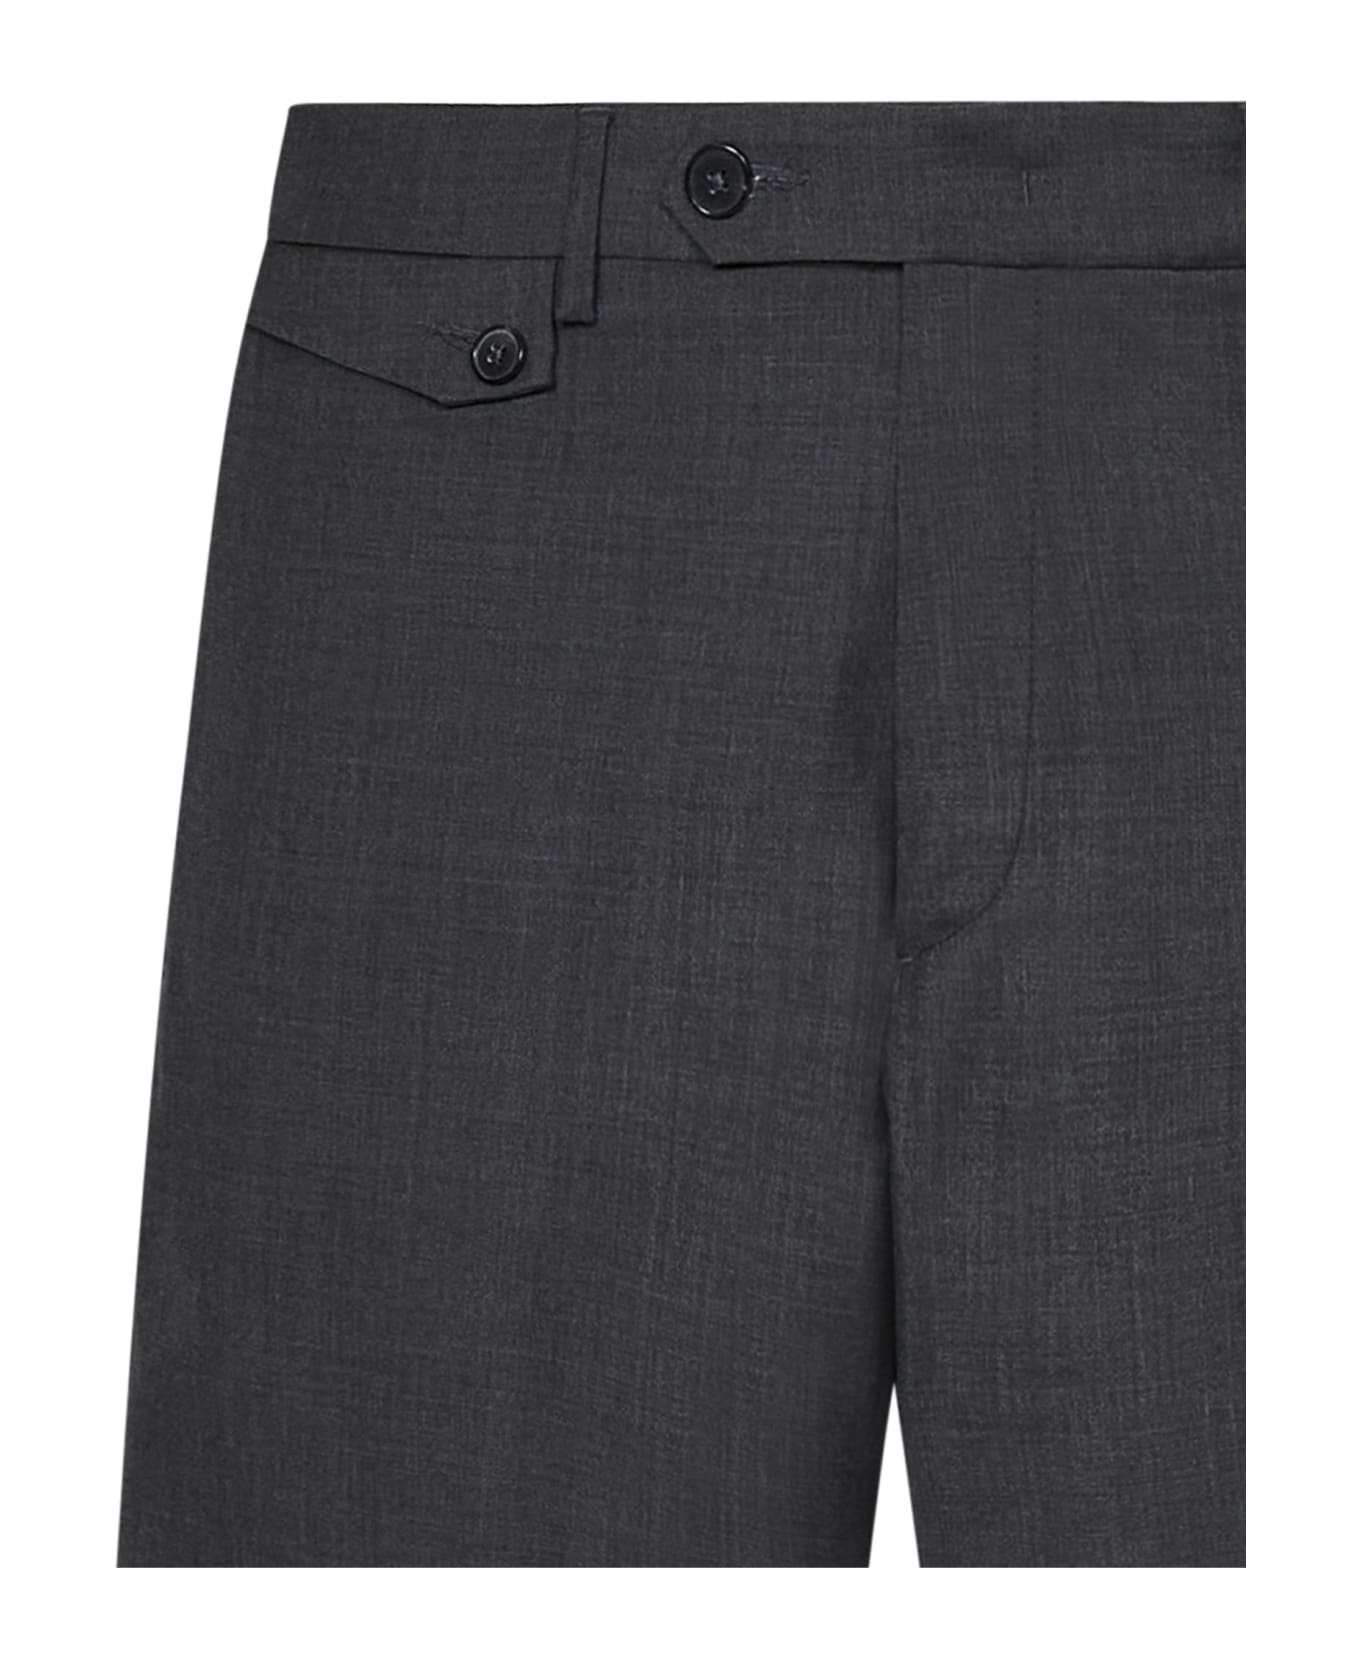 Low Brand Cooper Pocket Shorts - Grey